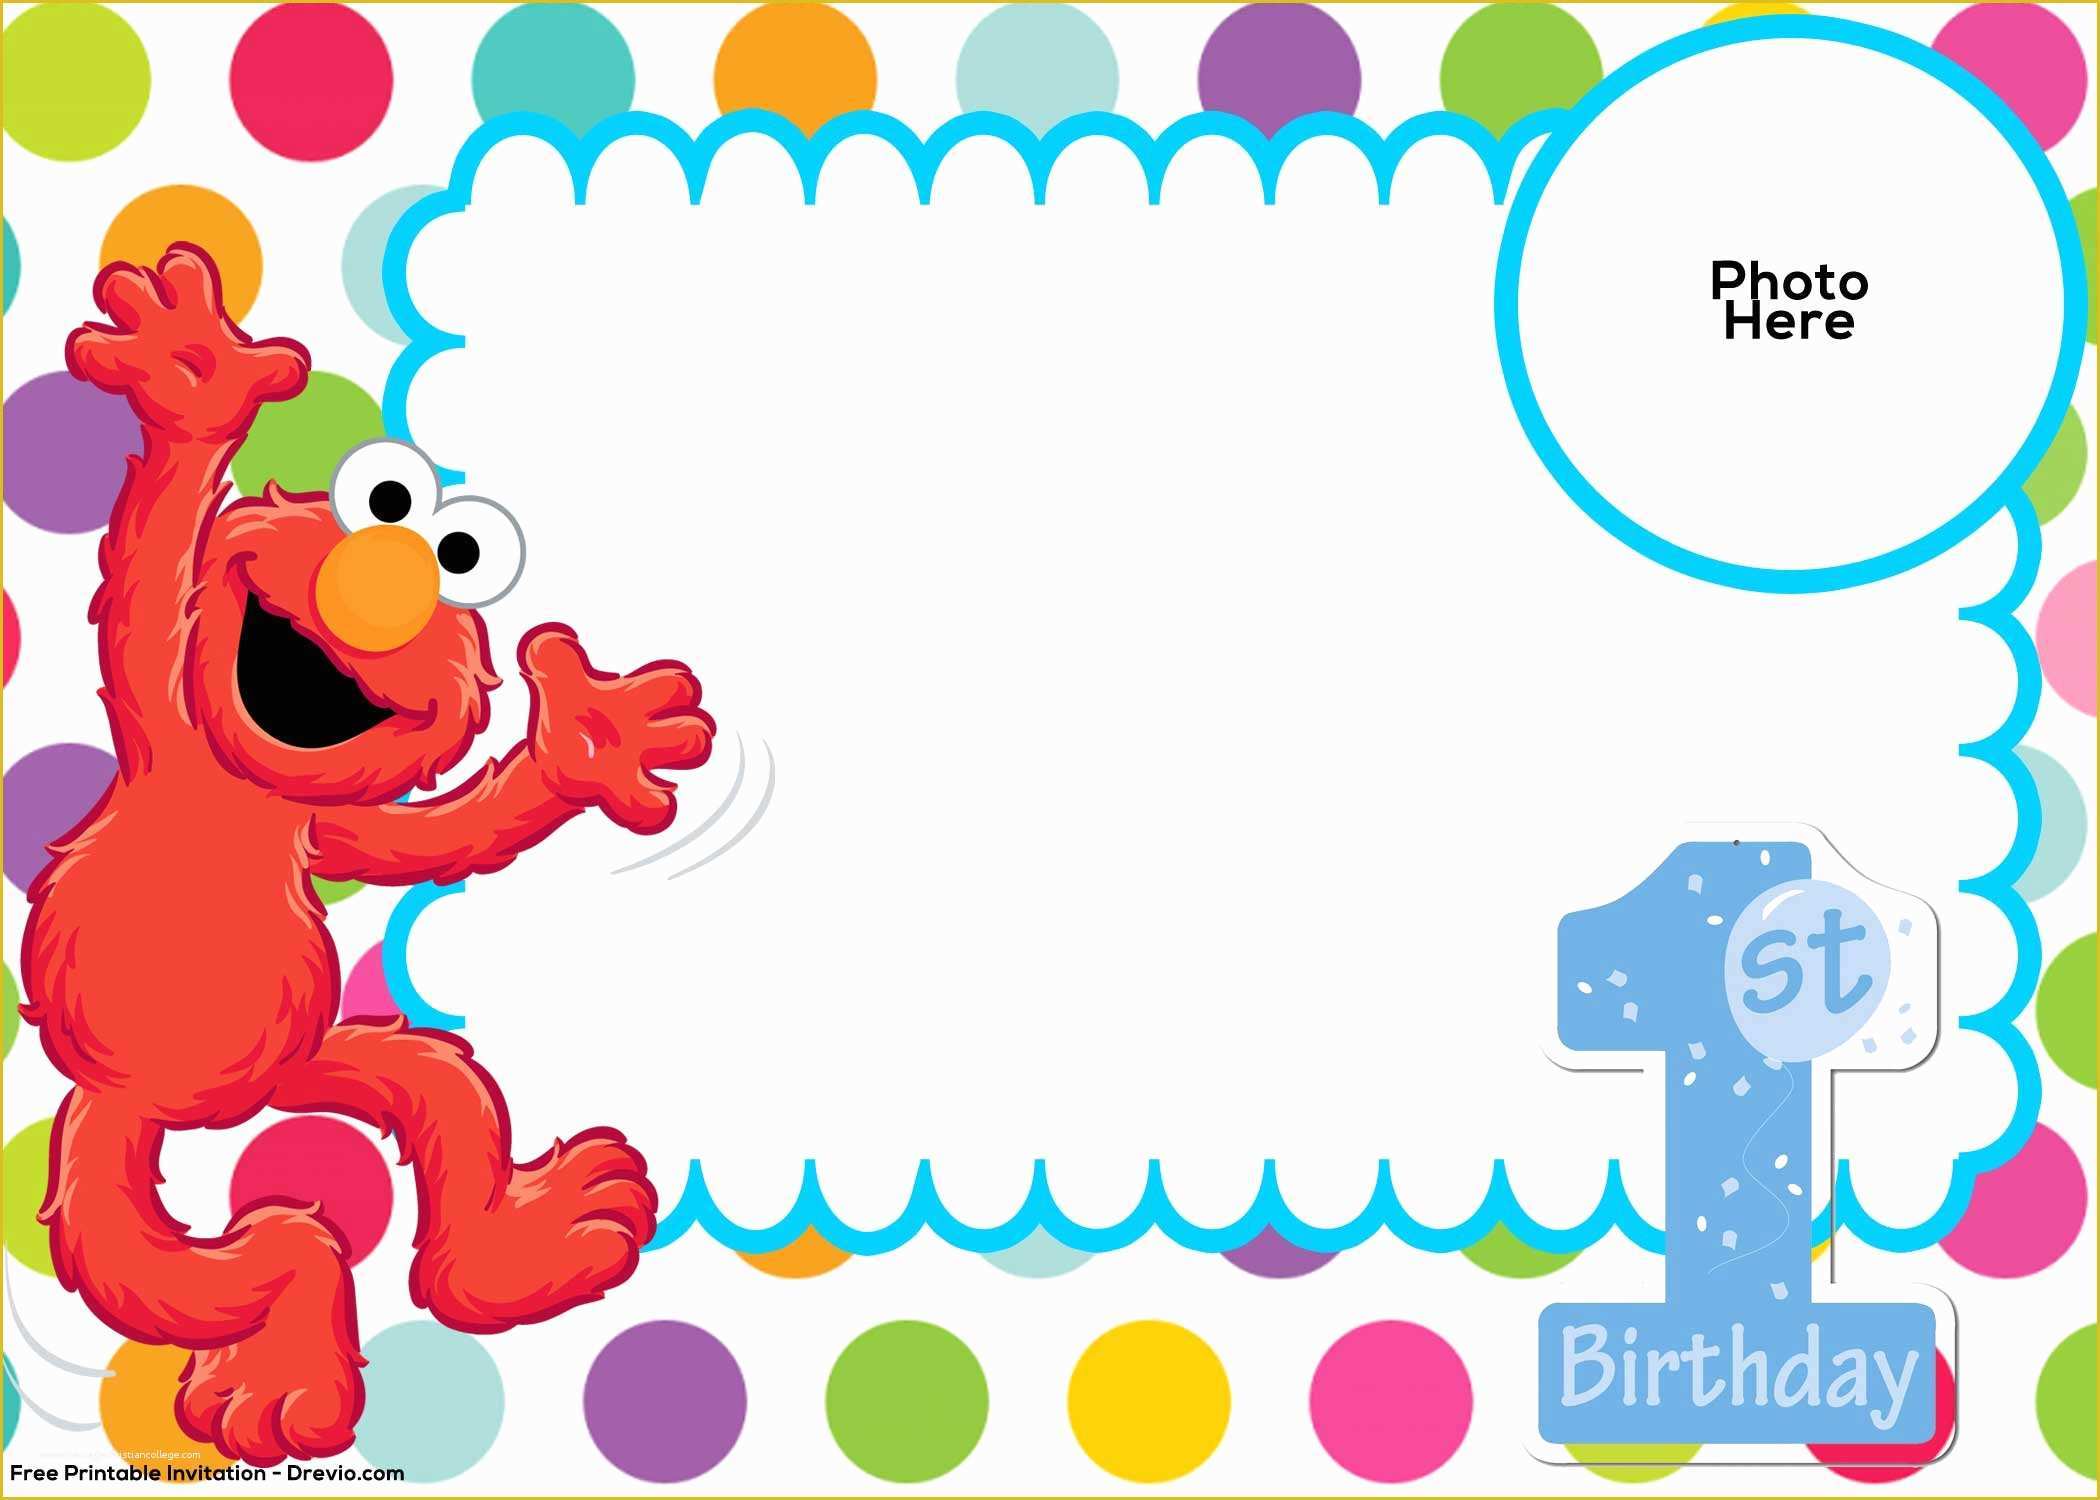 Free Photo Party Invitation Templates Of Free Sesame Street 1st Birthday Invitation Template